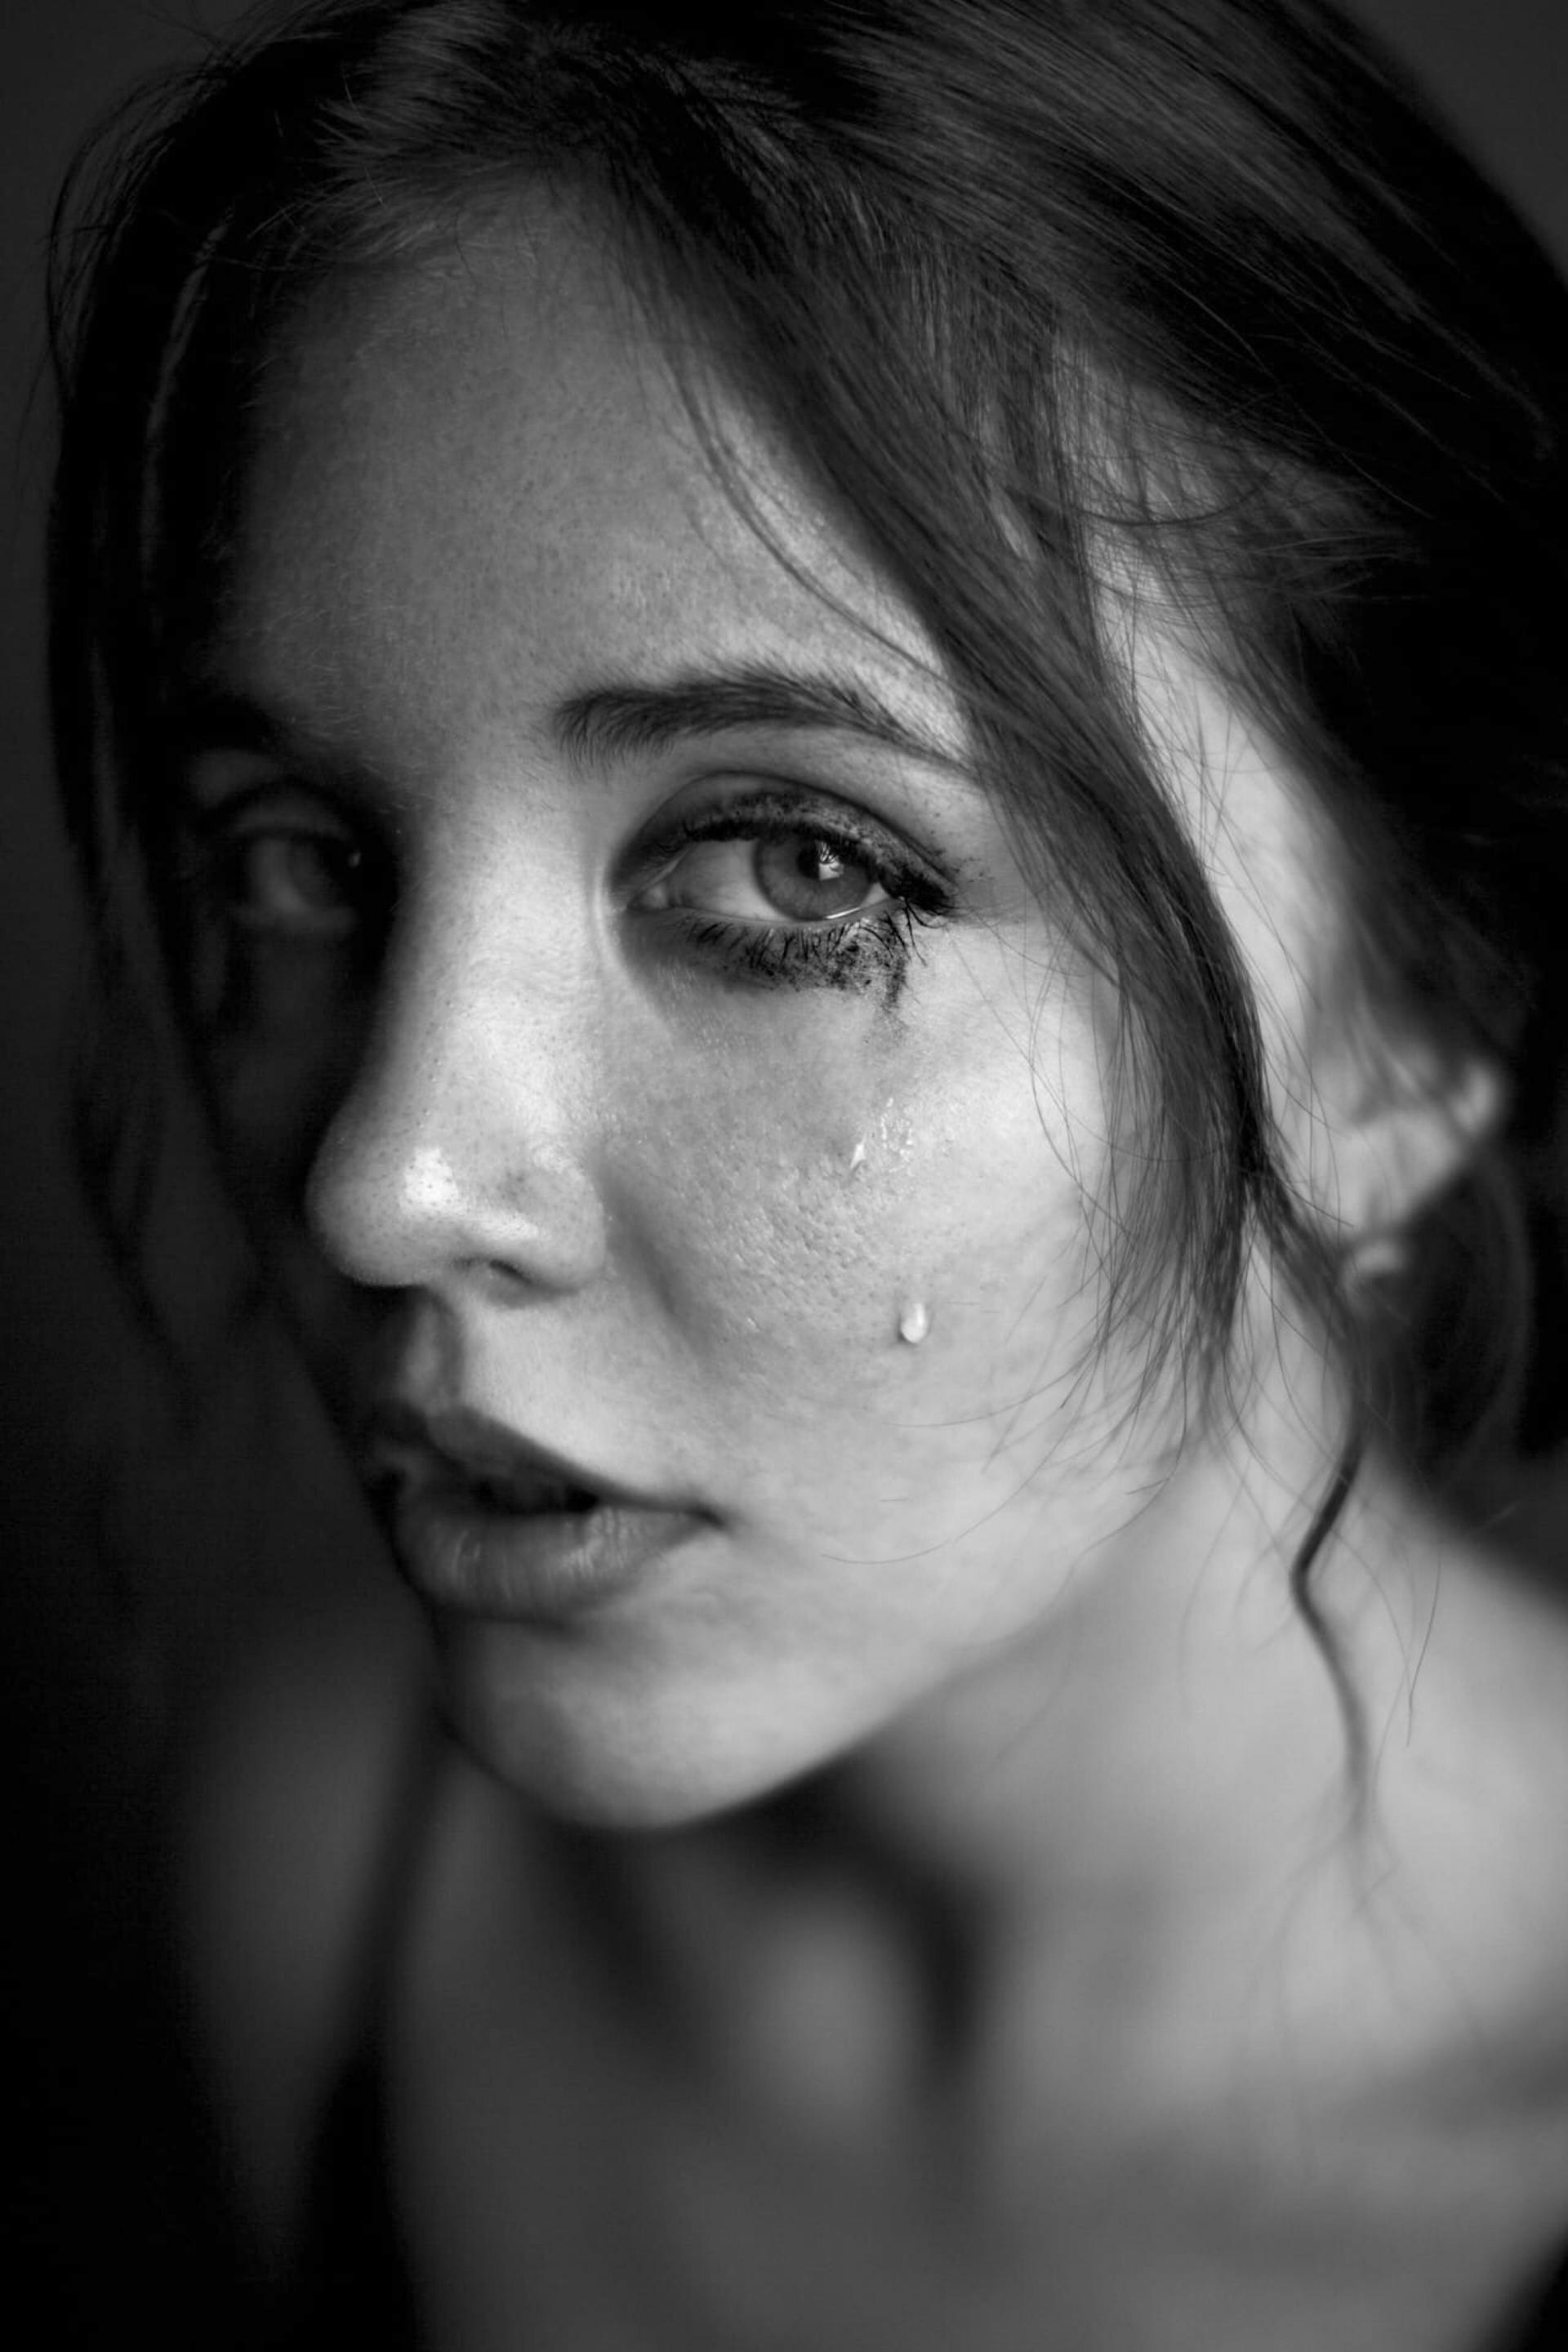 An upset woman | Source: Pexels